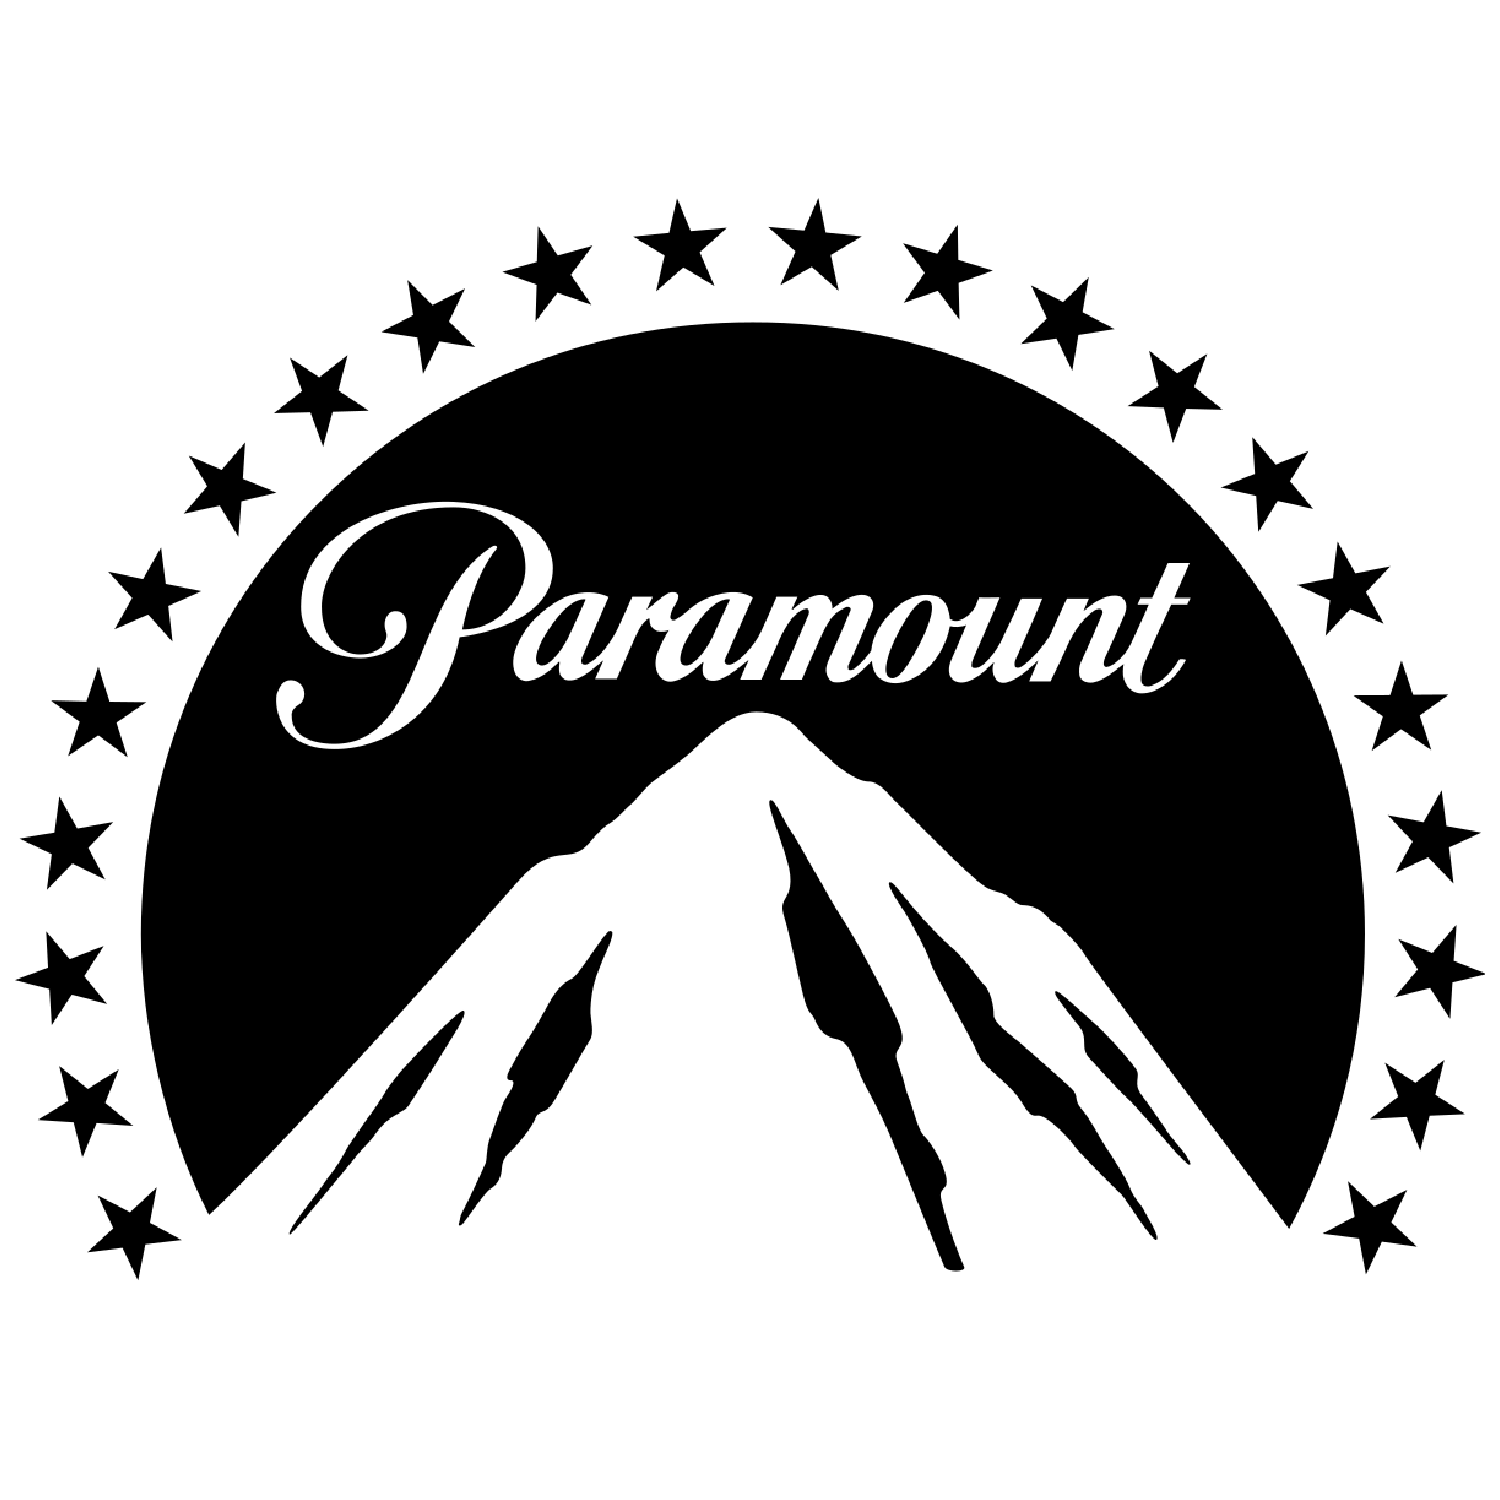 Paramount-1